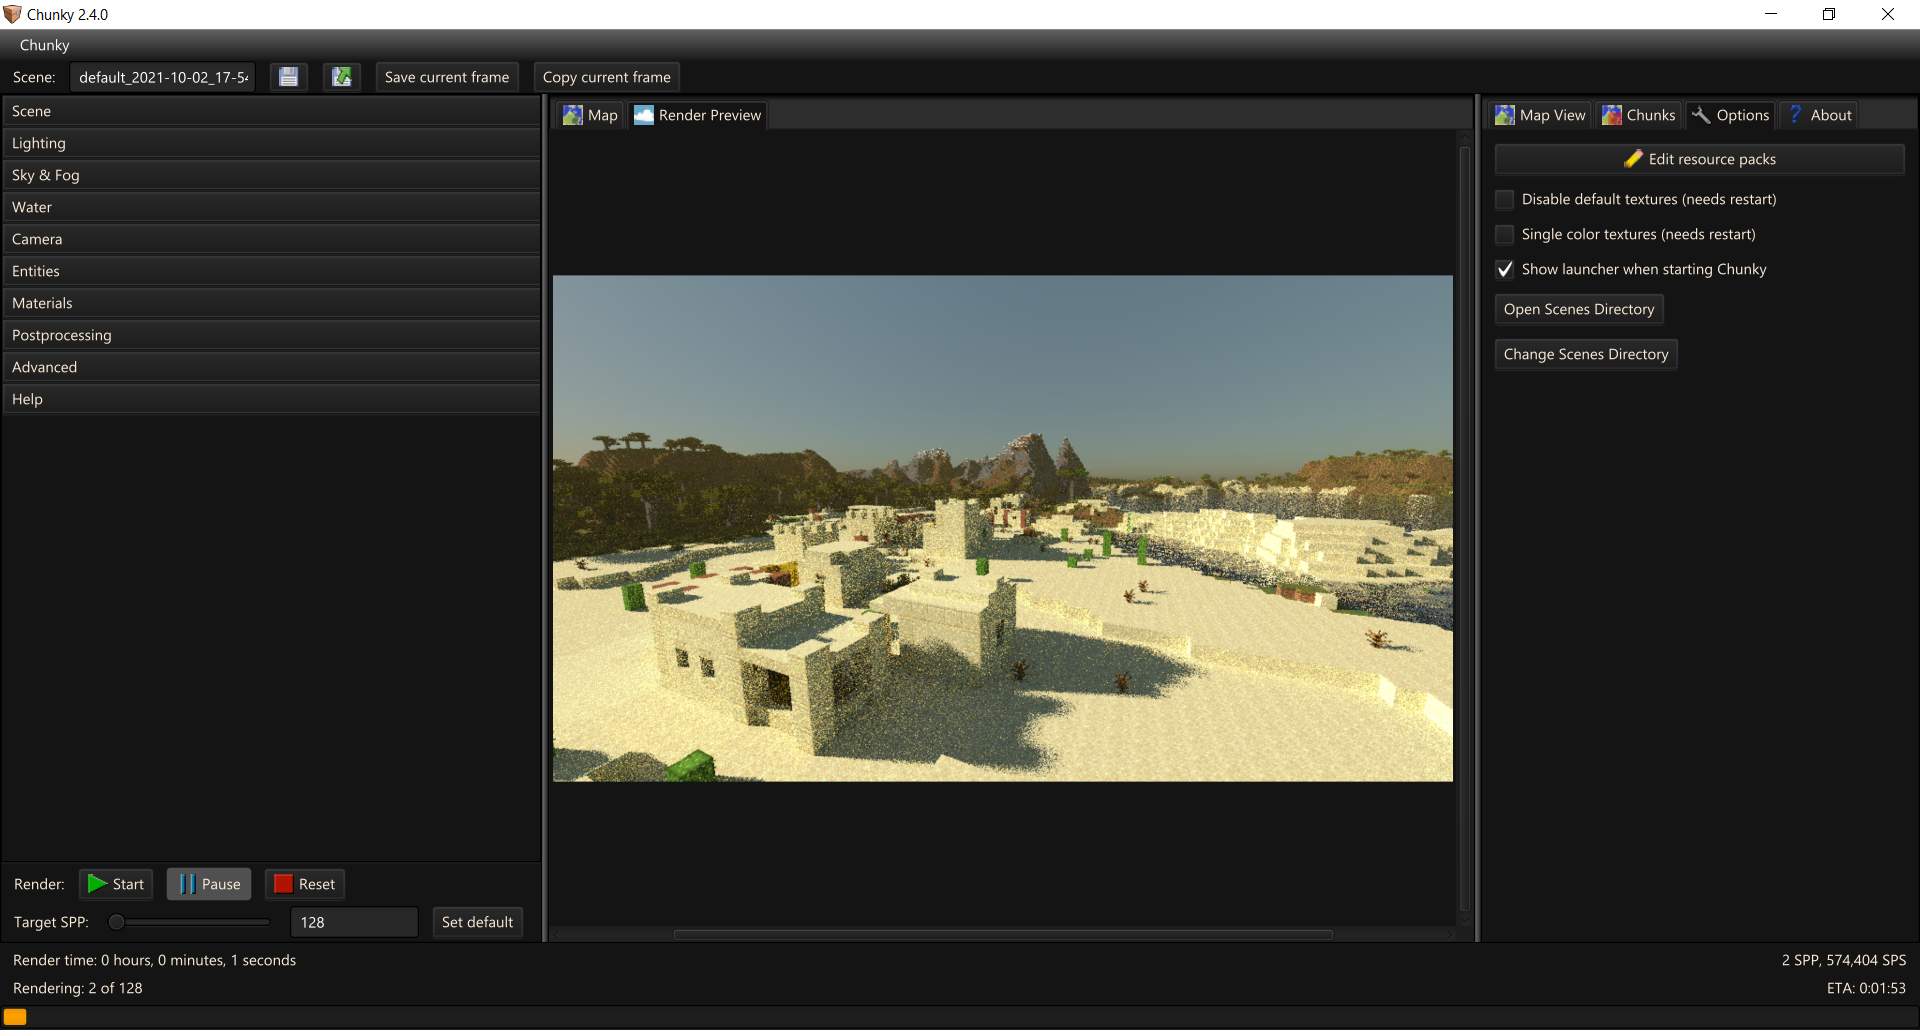 Render preview displaying live render progress